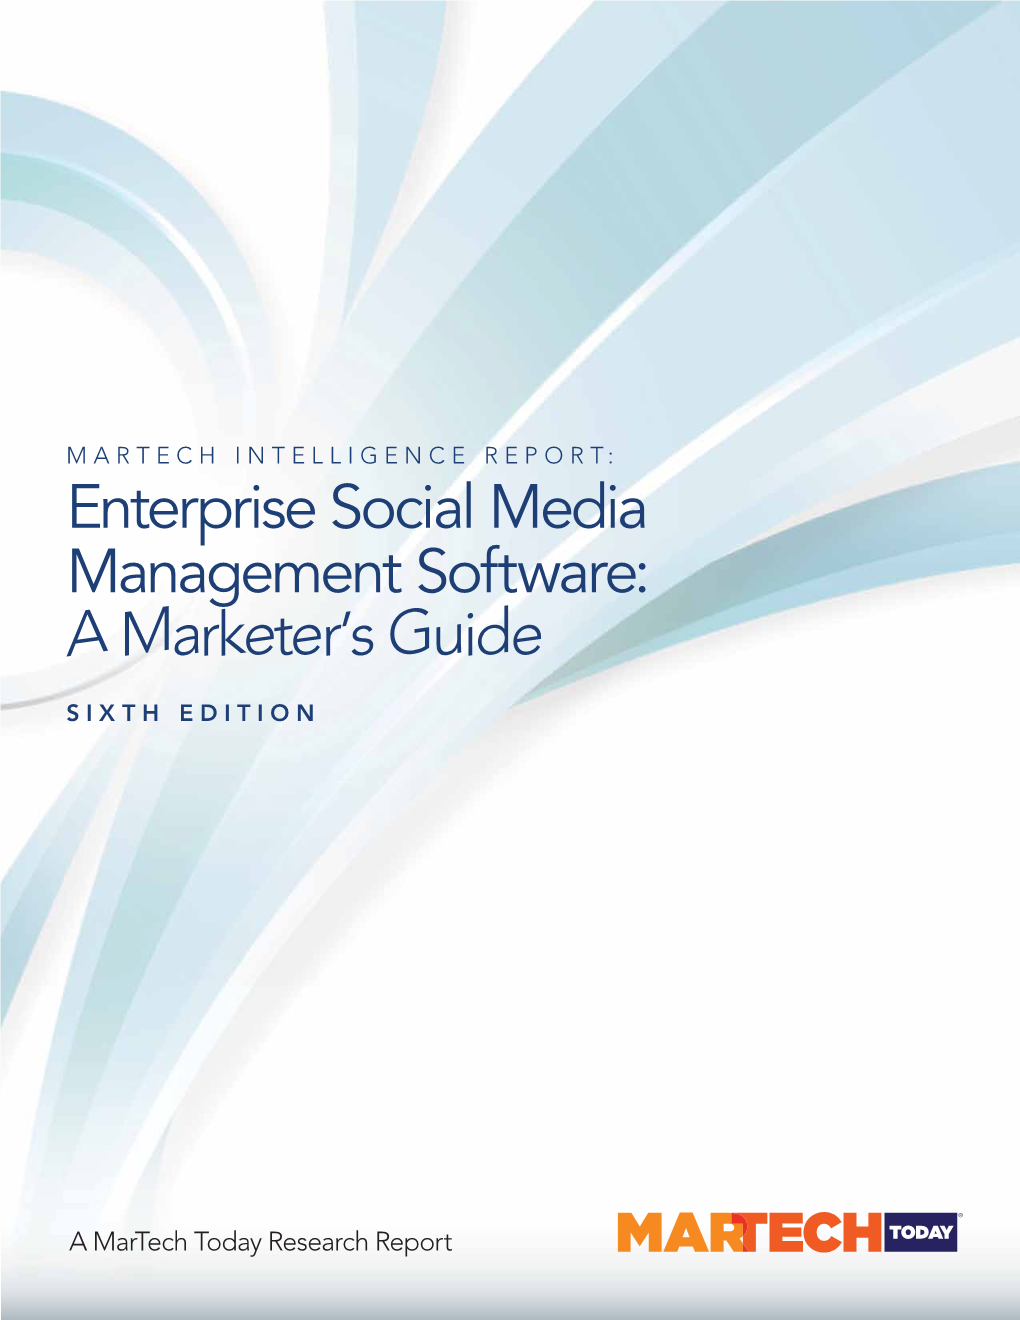 Enterprise Social Media Management Software: a Marketer's Guide